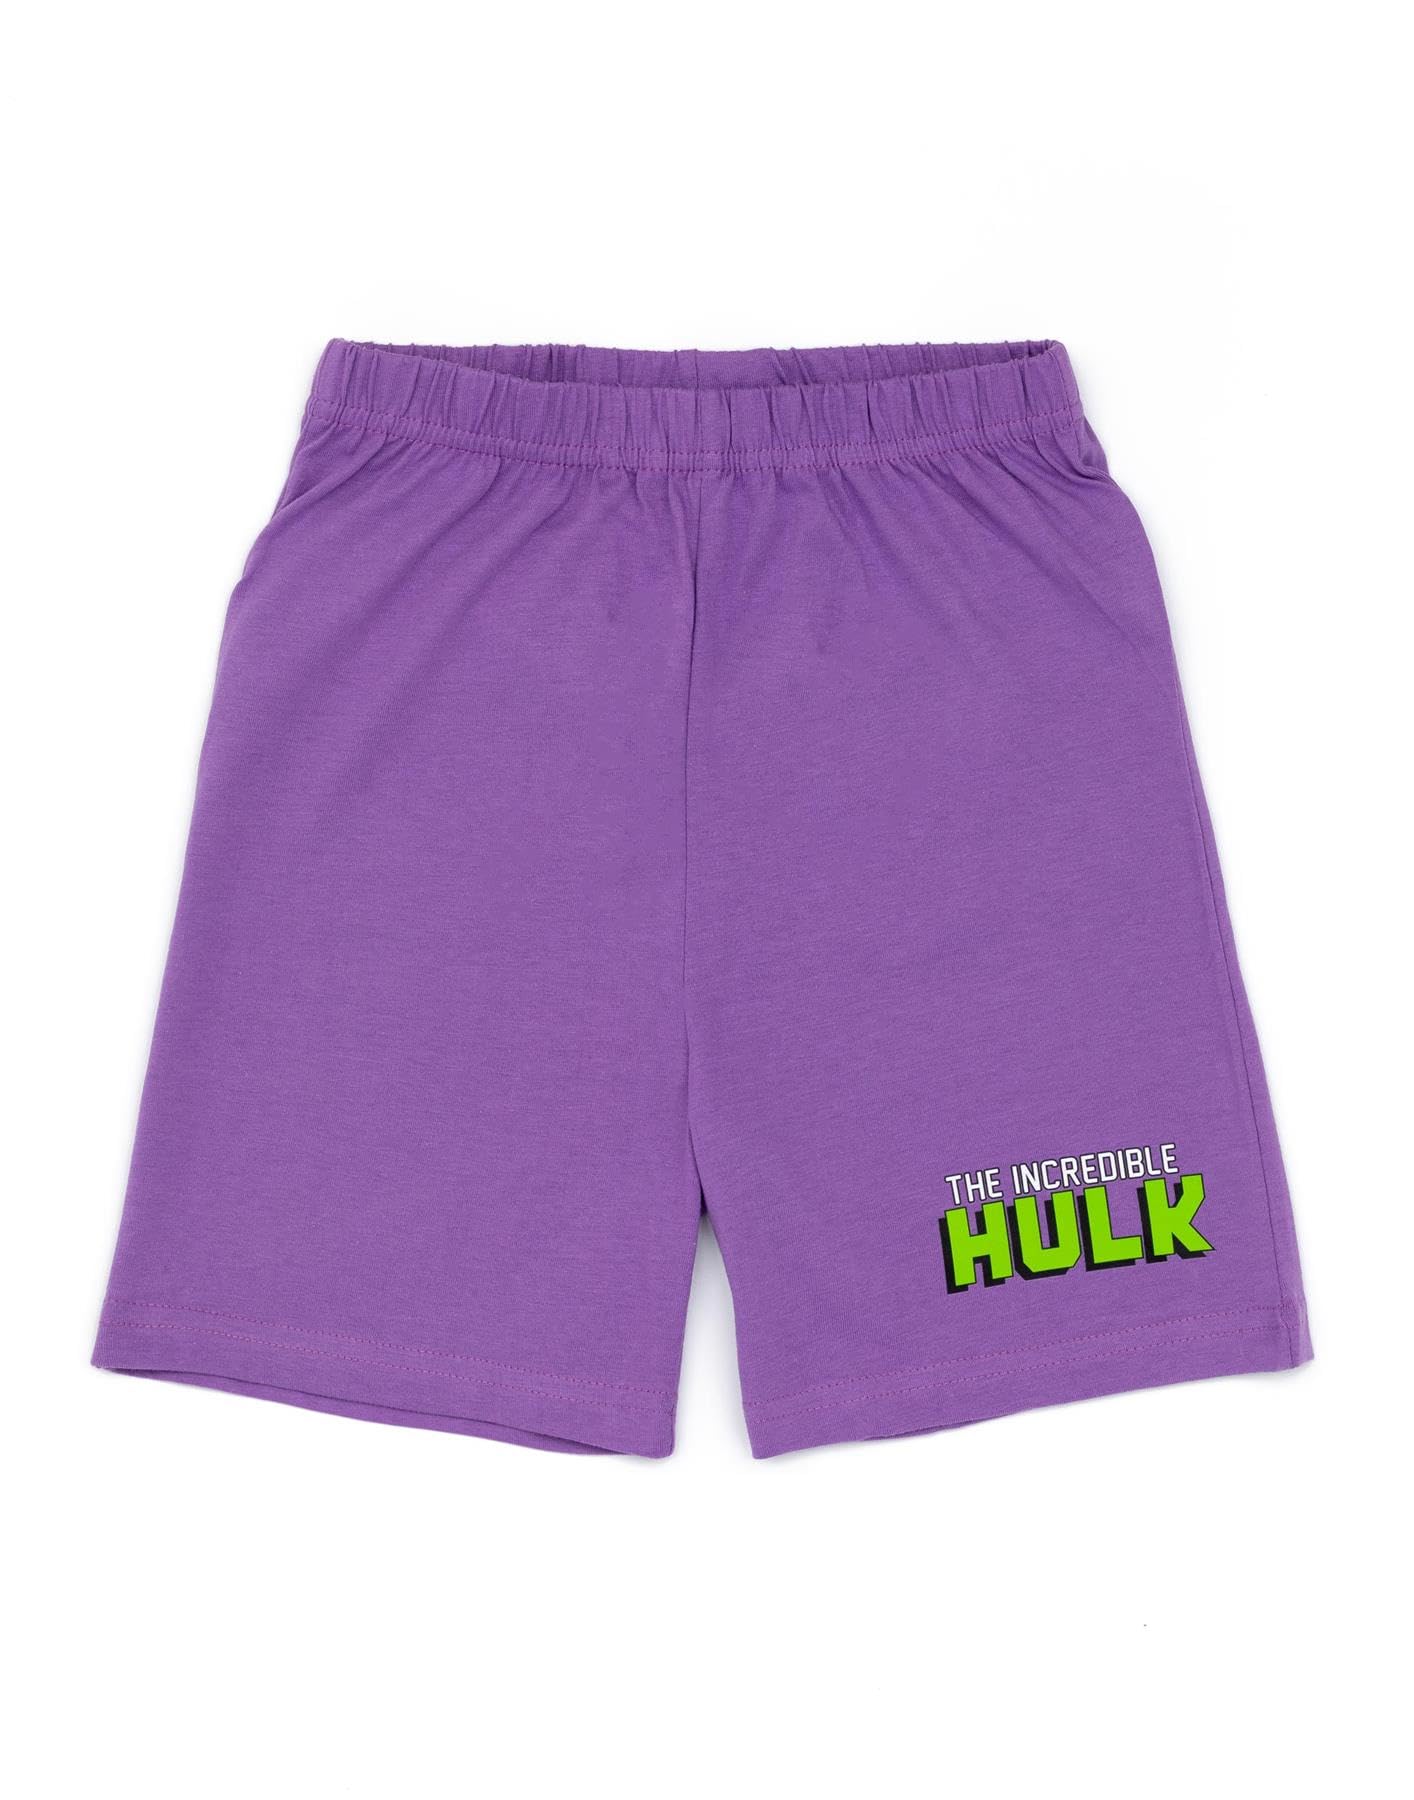 Marvel Hulk Boys Pyjama Set | Kids Green & Purple T-Shirt & Shorts PJs Loungewear | Superhero Suit Pajama Nightwear Gift Set